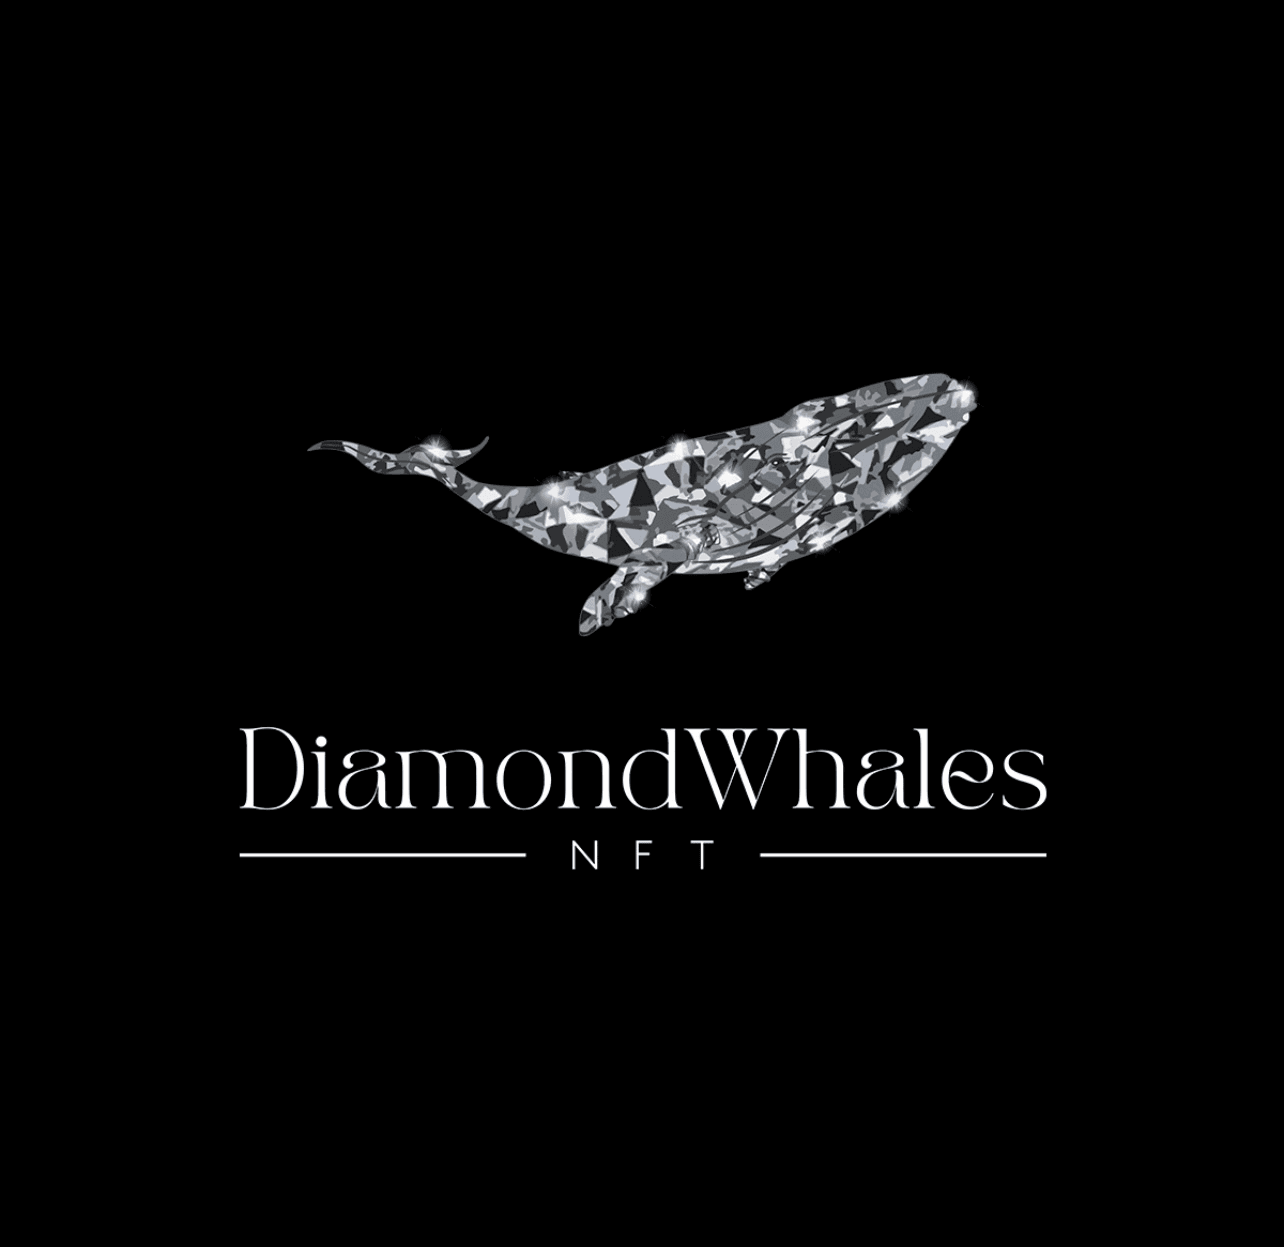 Diamondwhale168